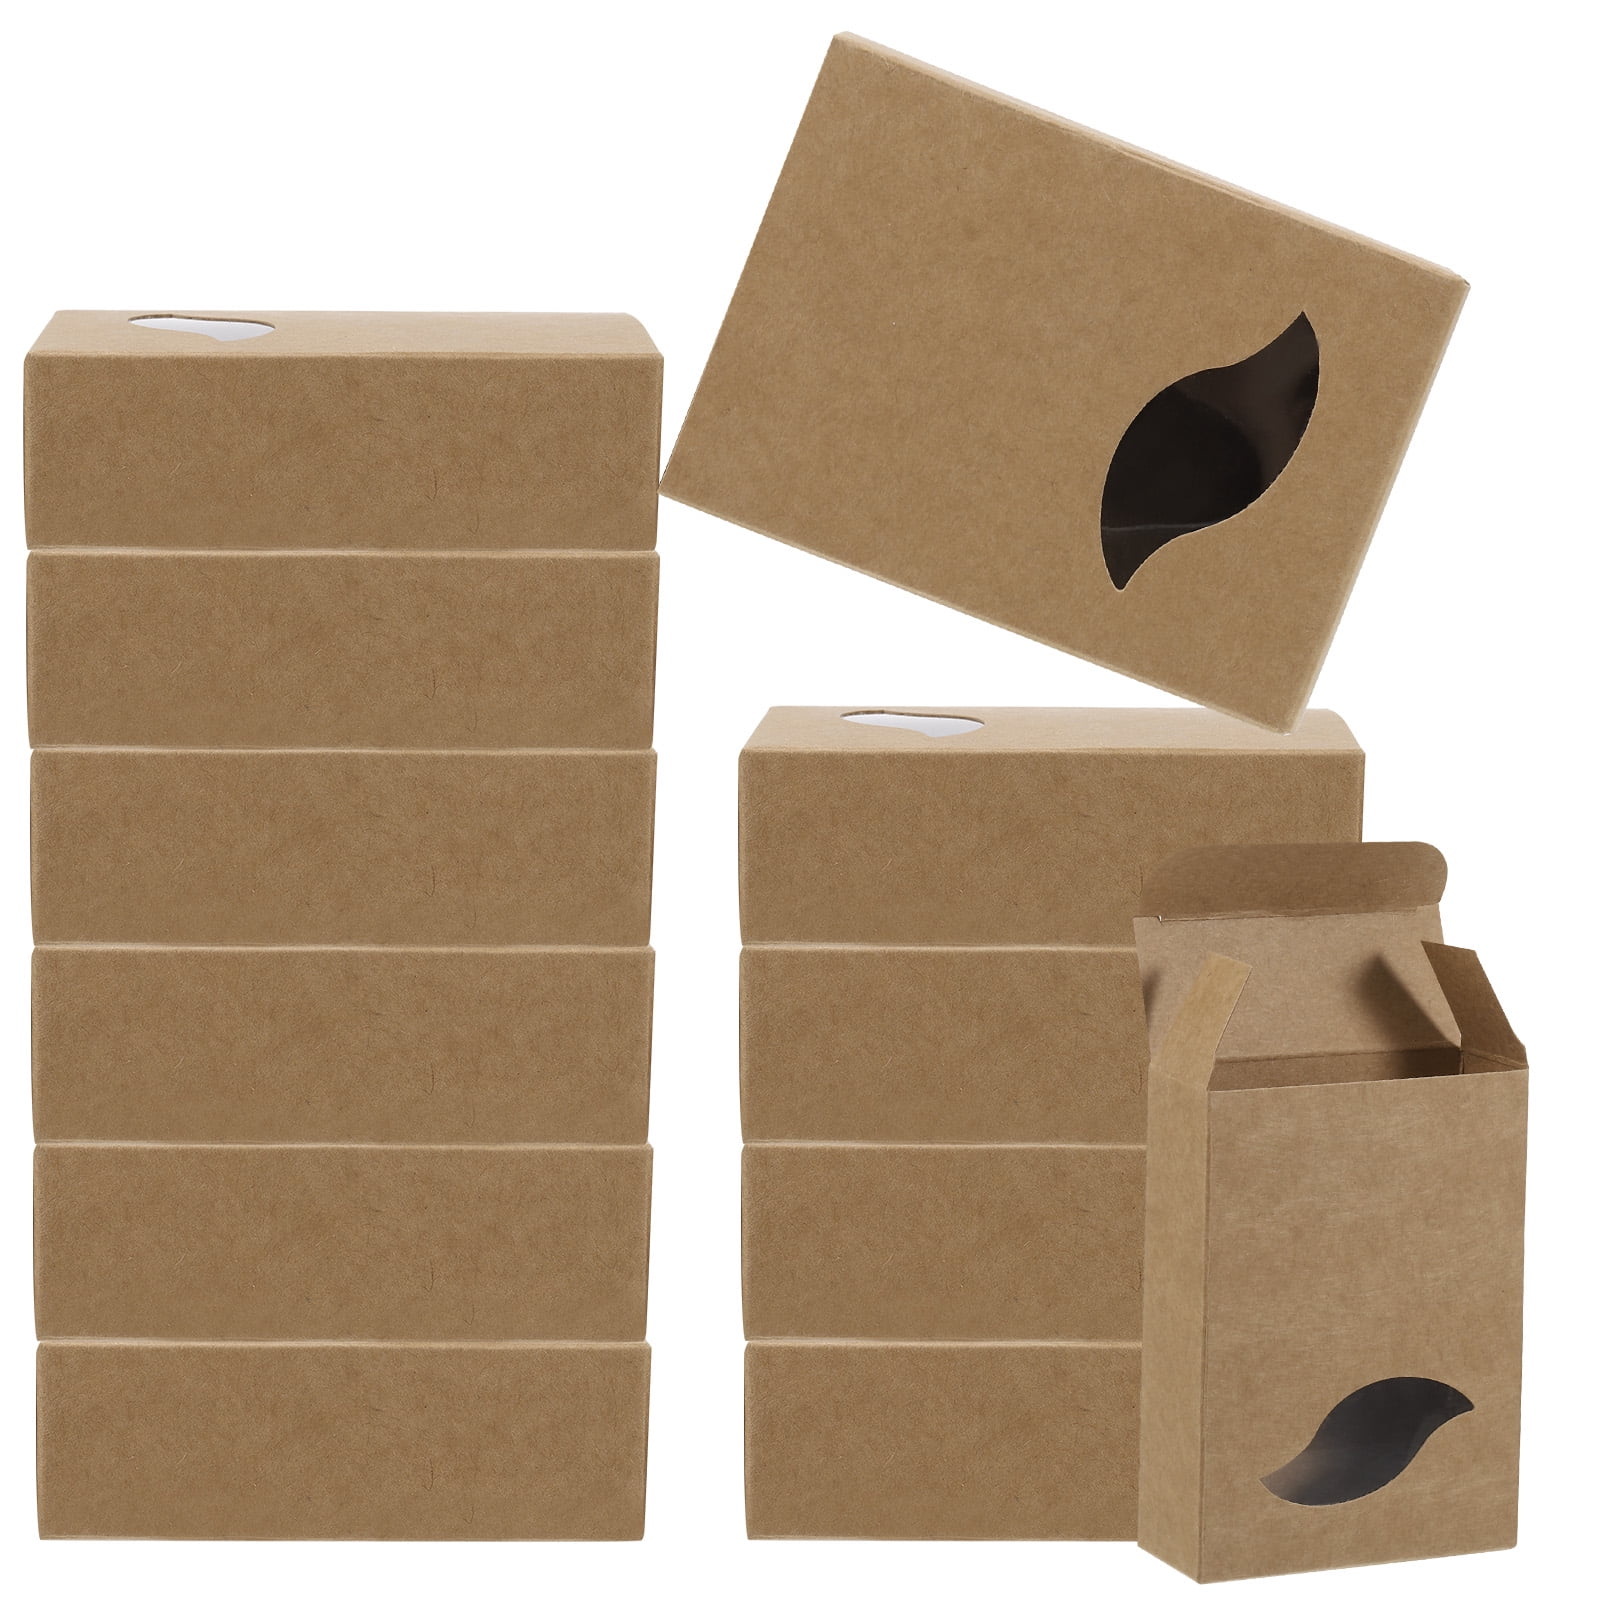 4x3x1 Paper Soap Box, 30 Pack Soap Boxes Rectangle, White